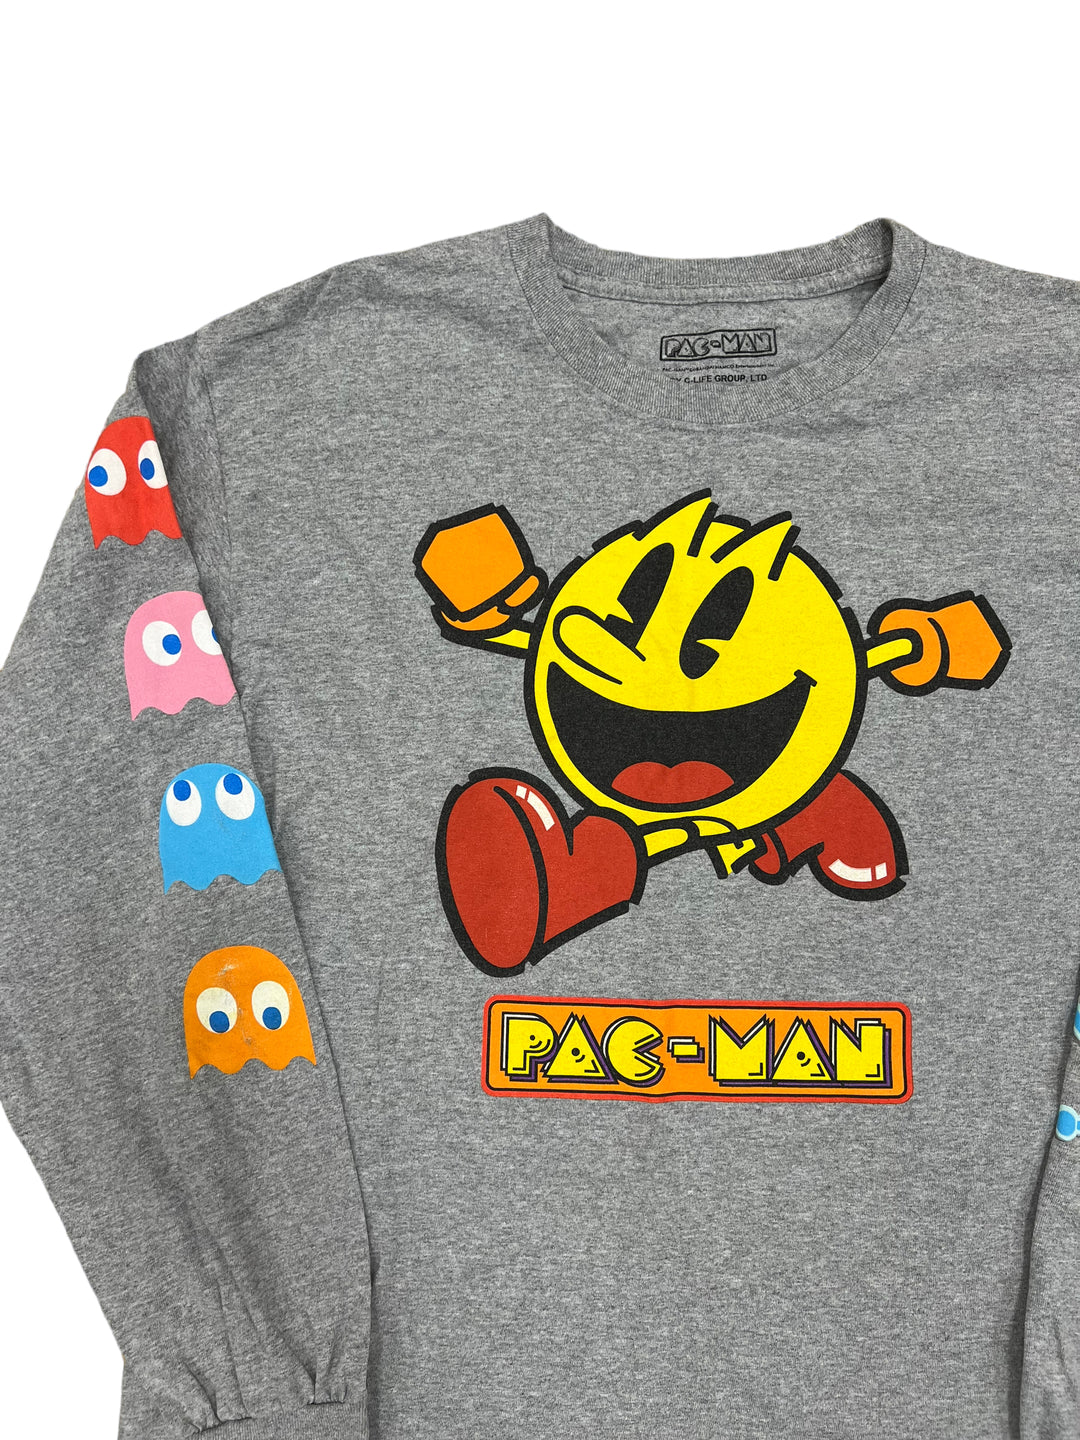 PAC-MAN Vintage Thin Sweatshirt Men’s Medium